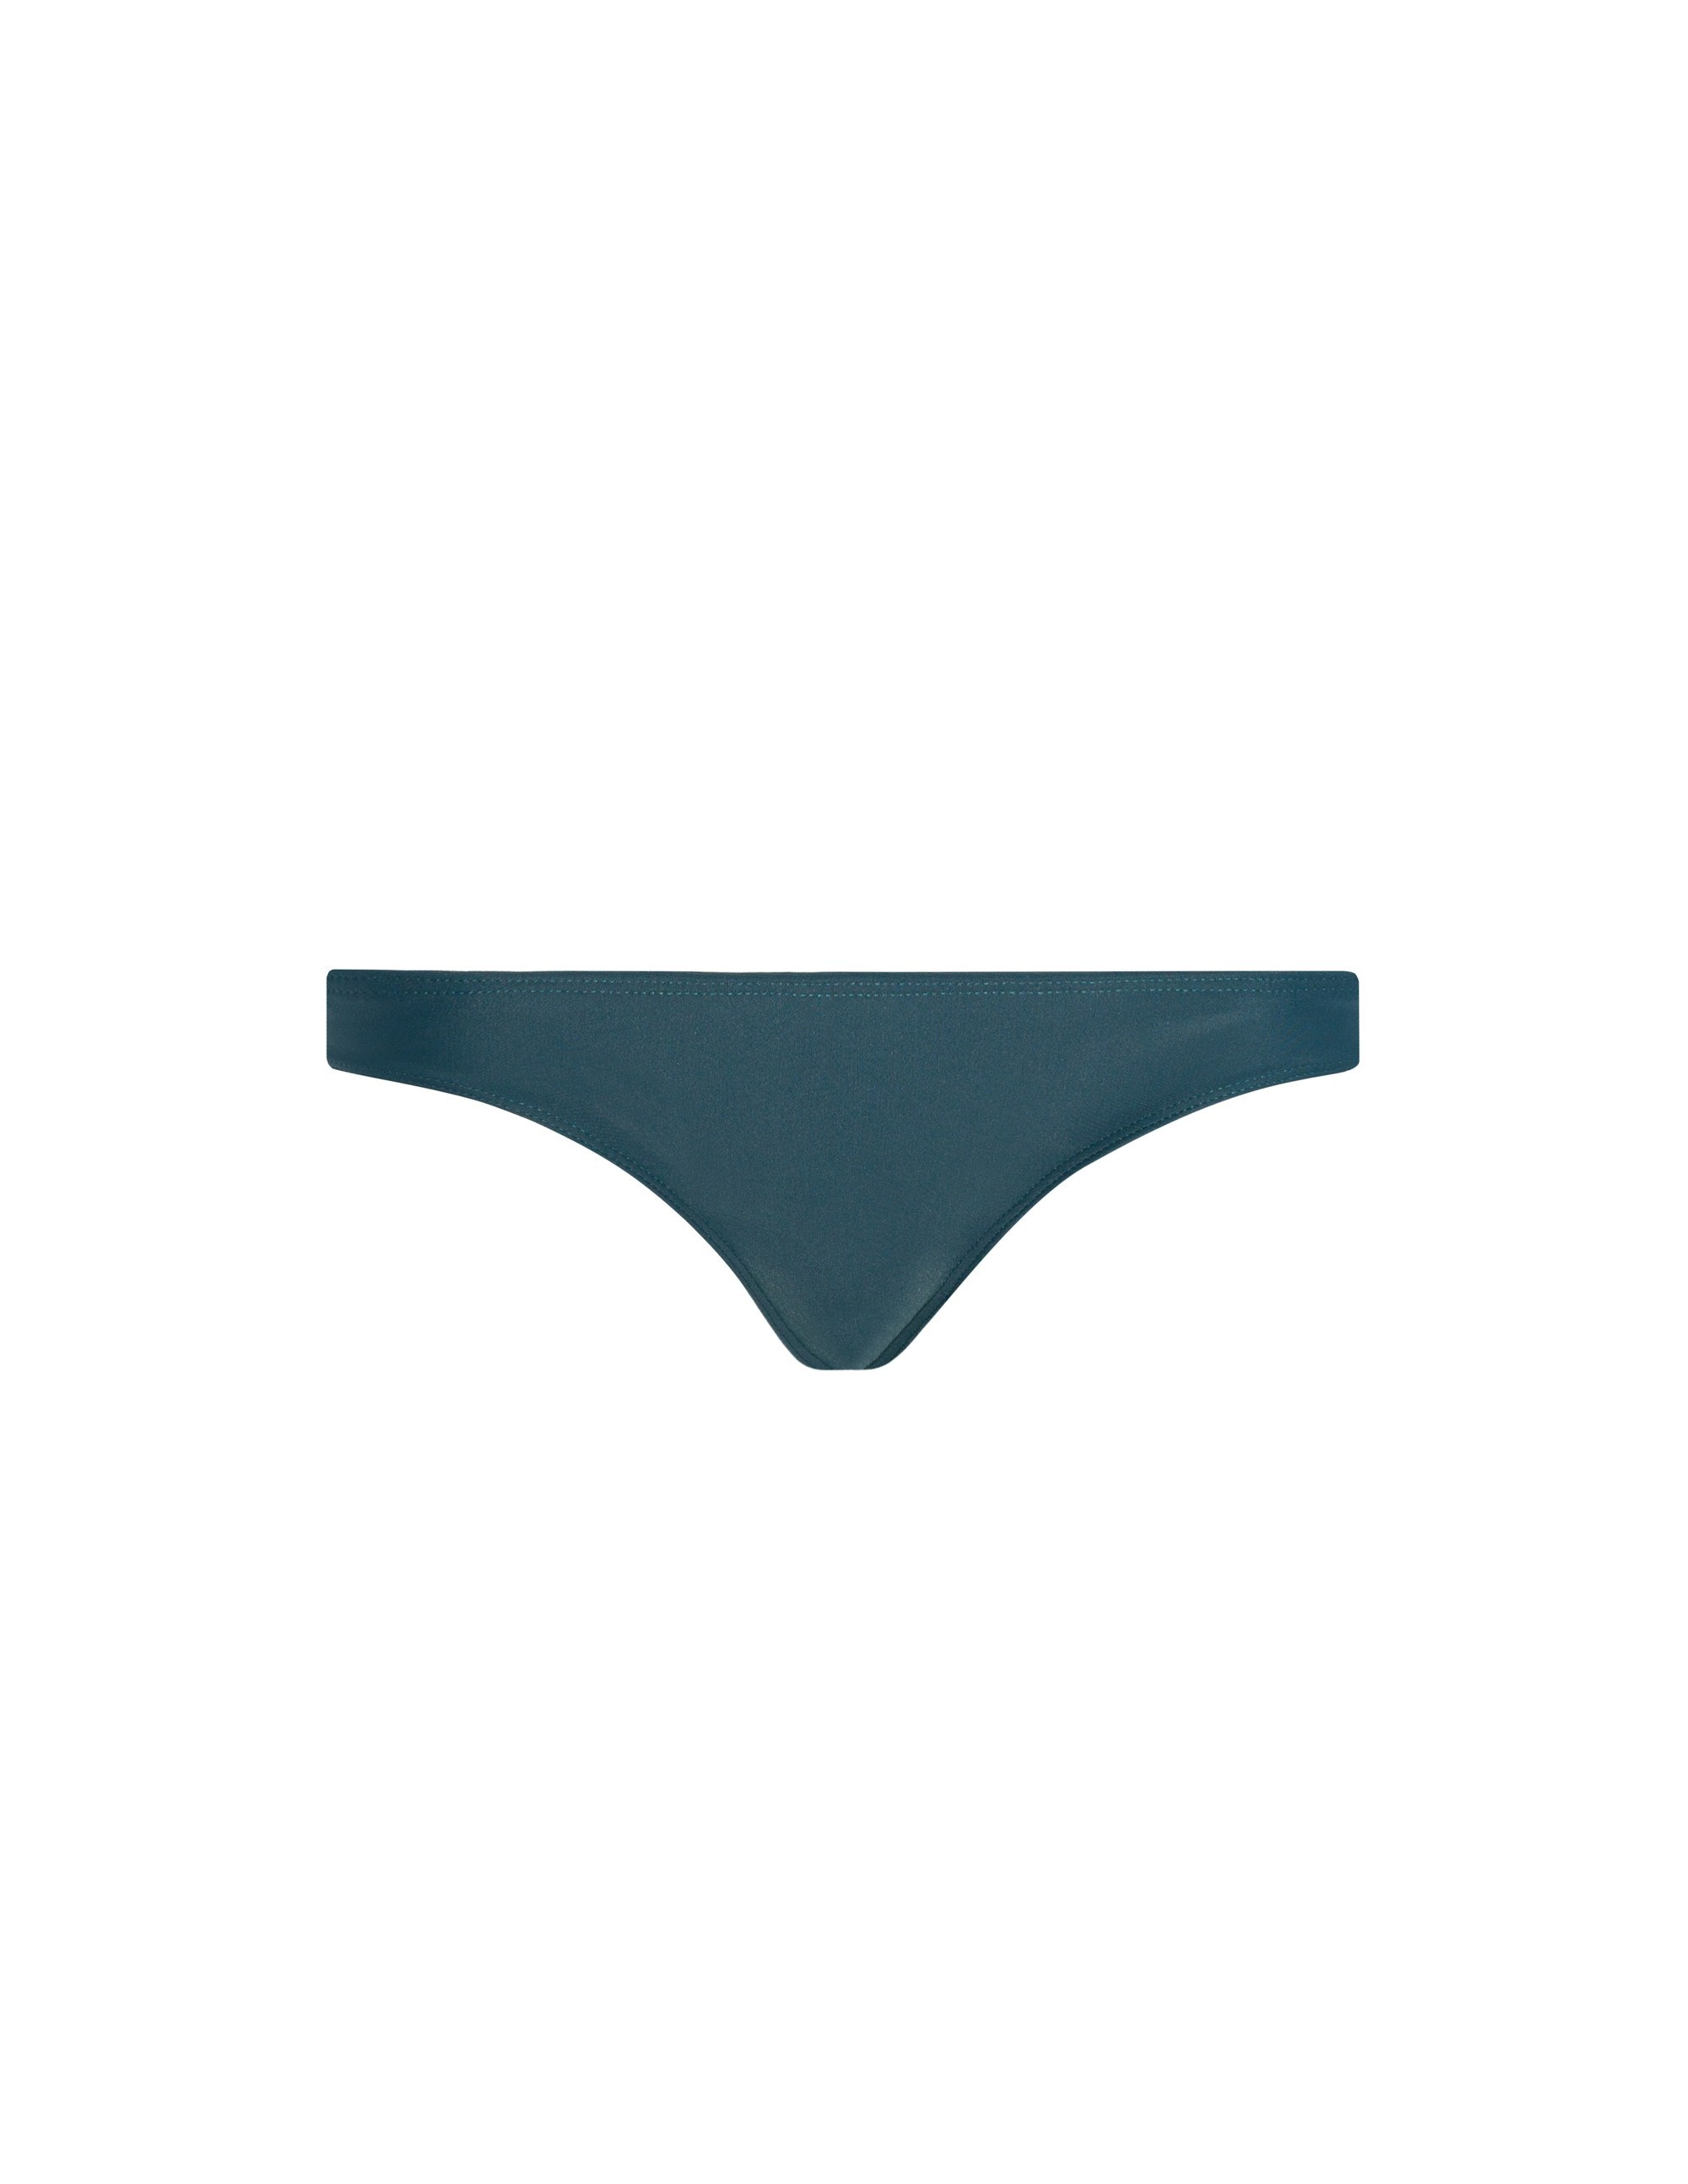 PARAISO bikini bottom - DEEP GREEN